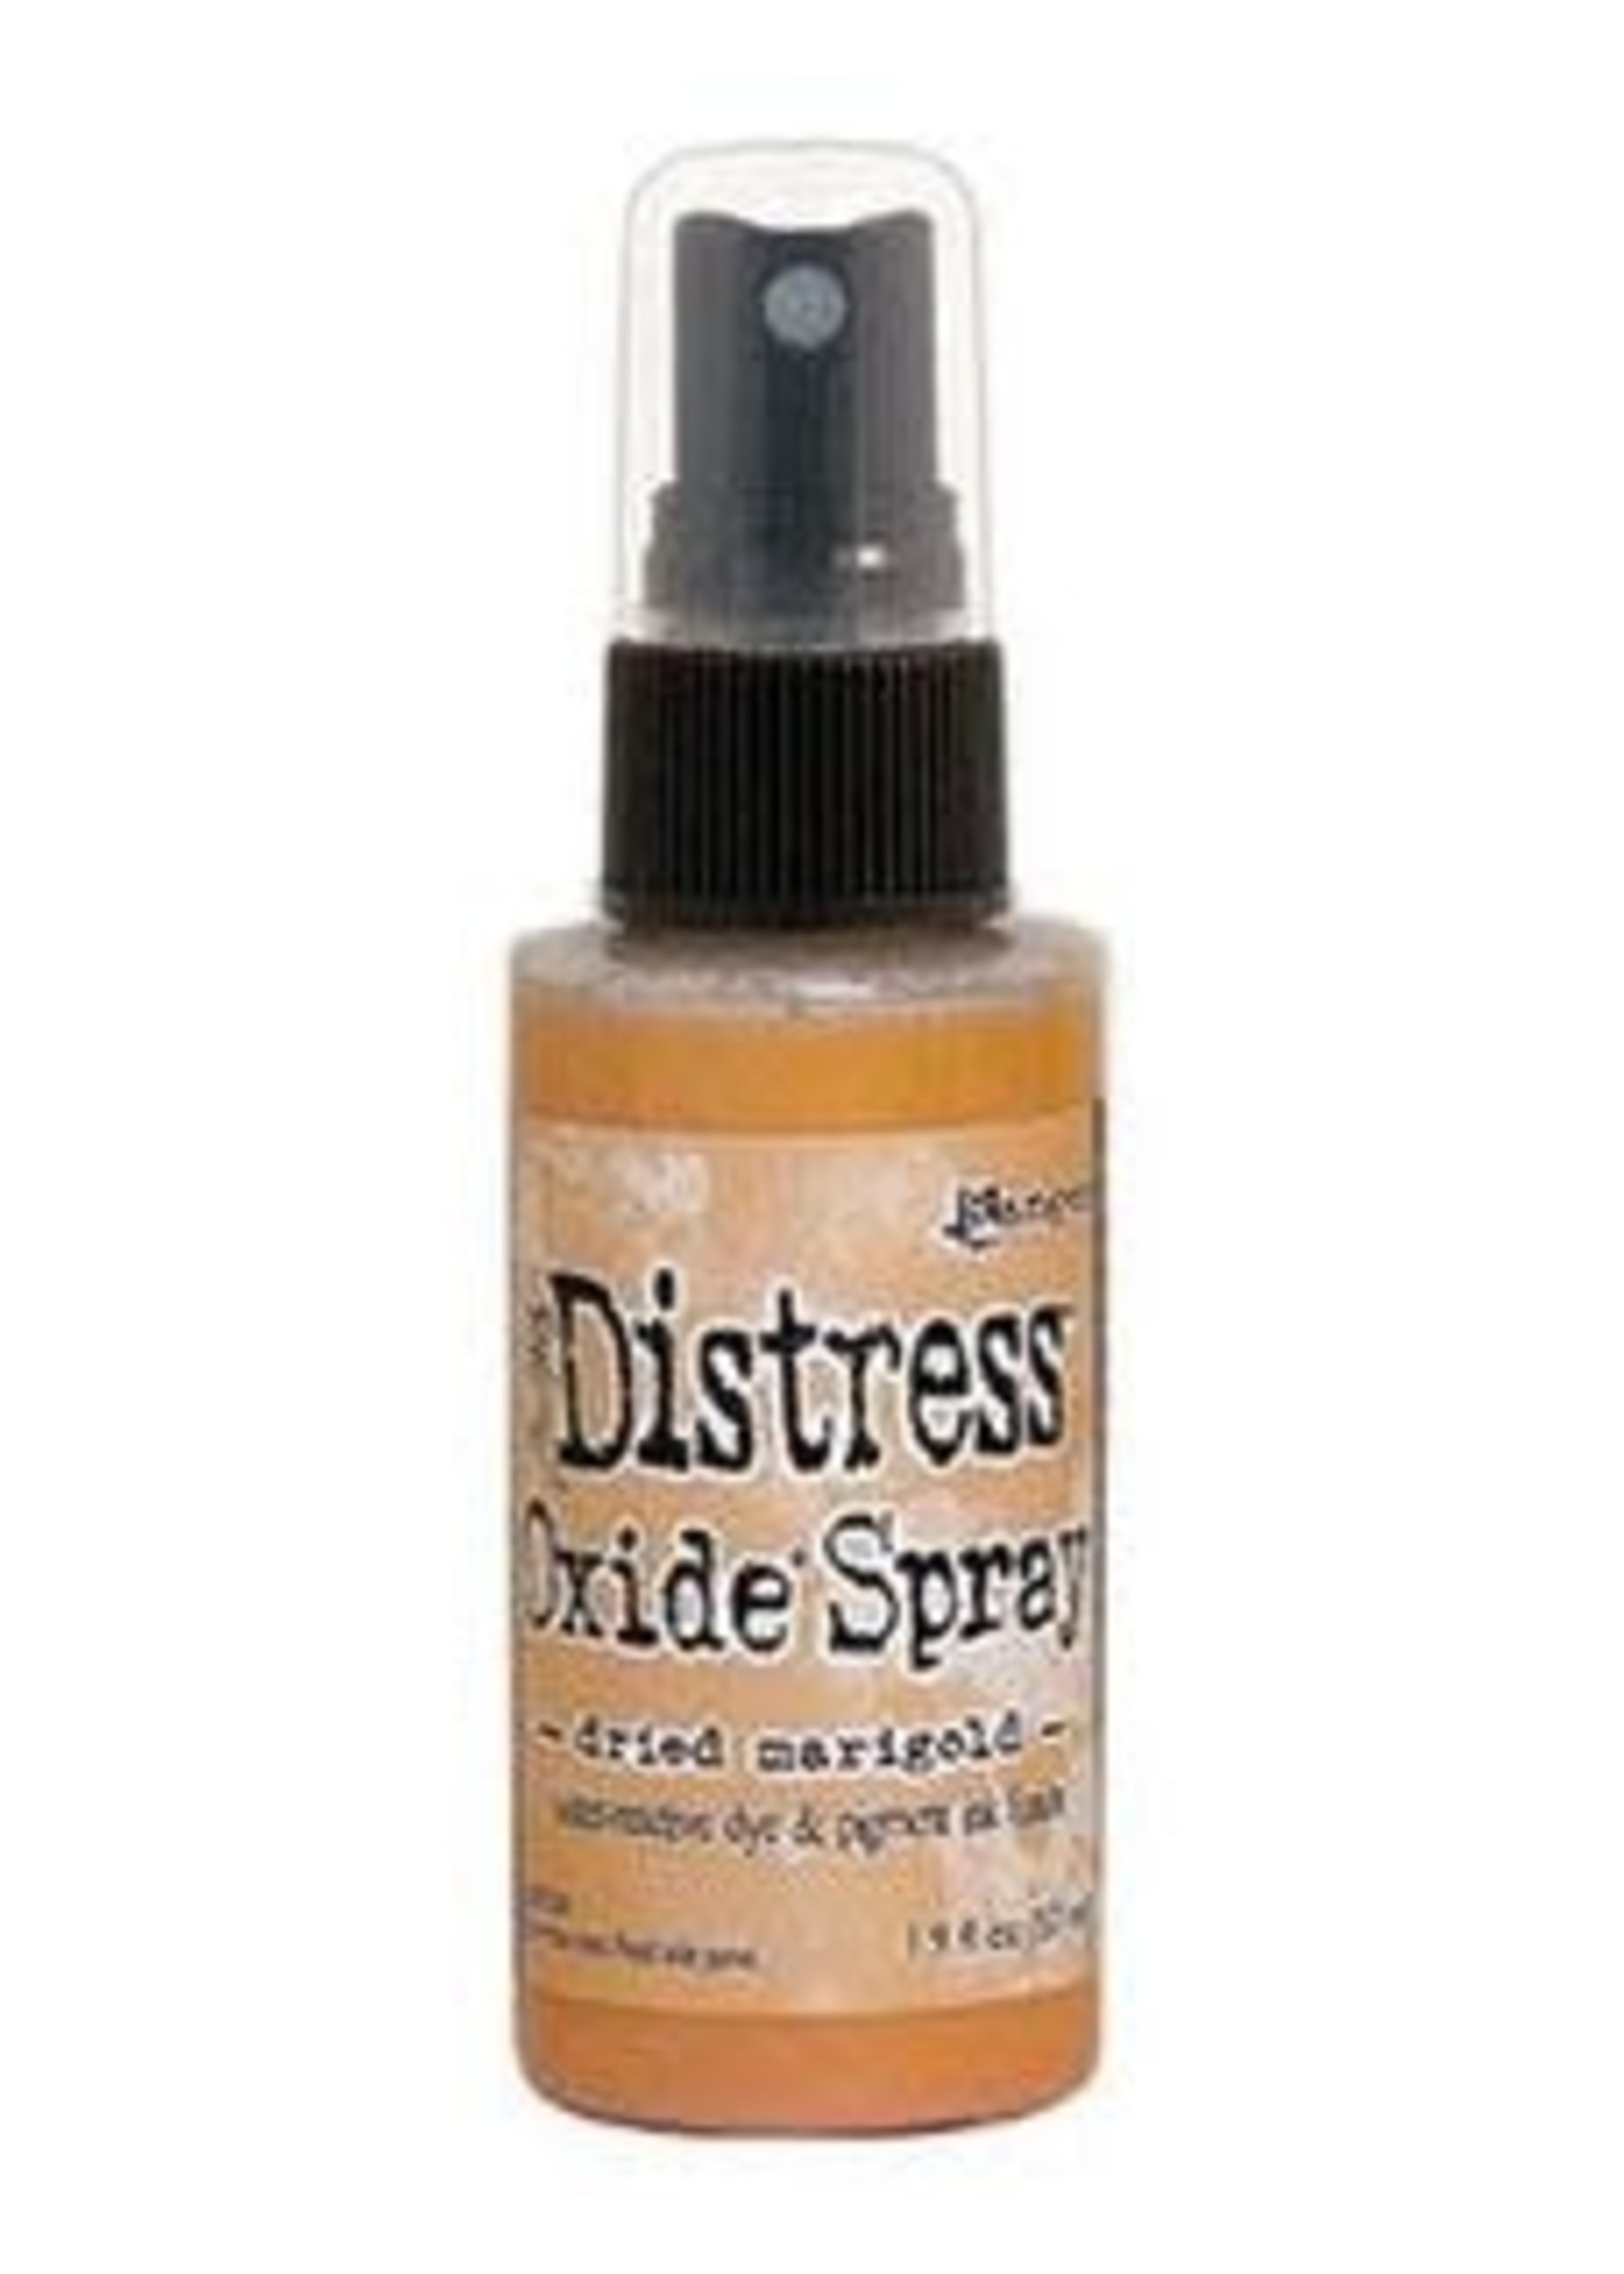 RANGER Distress Oxide Spray Dried Marigold